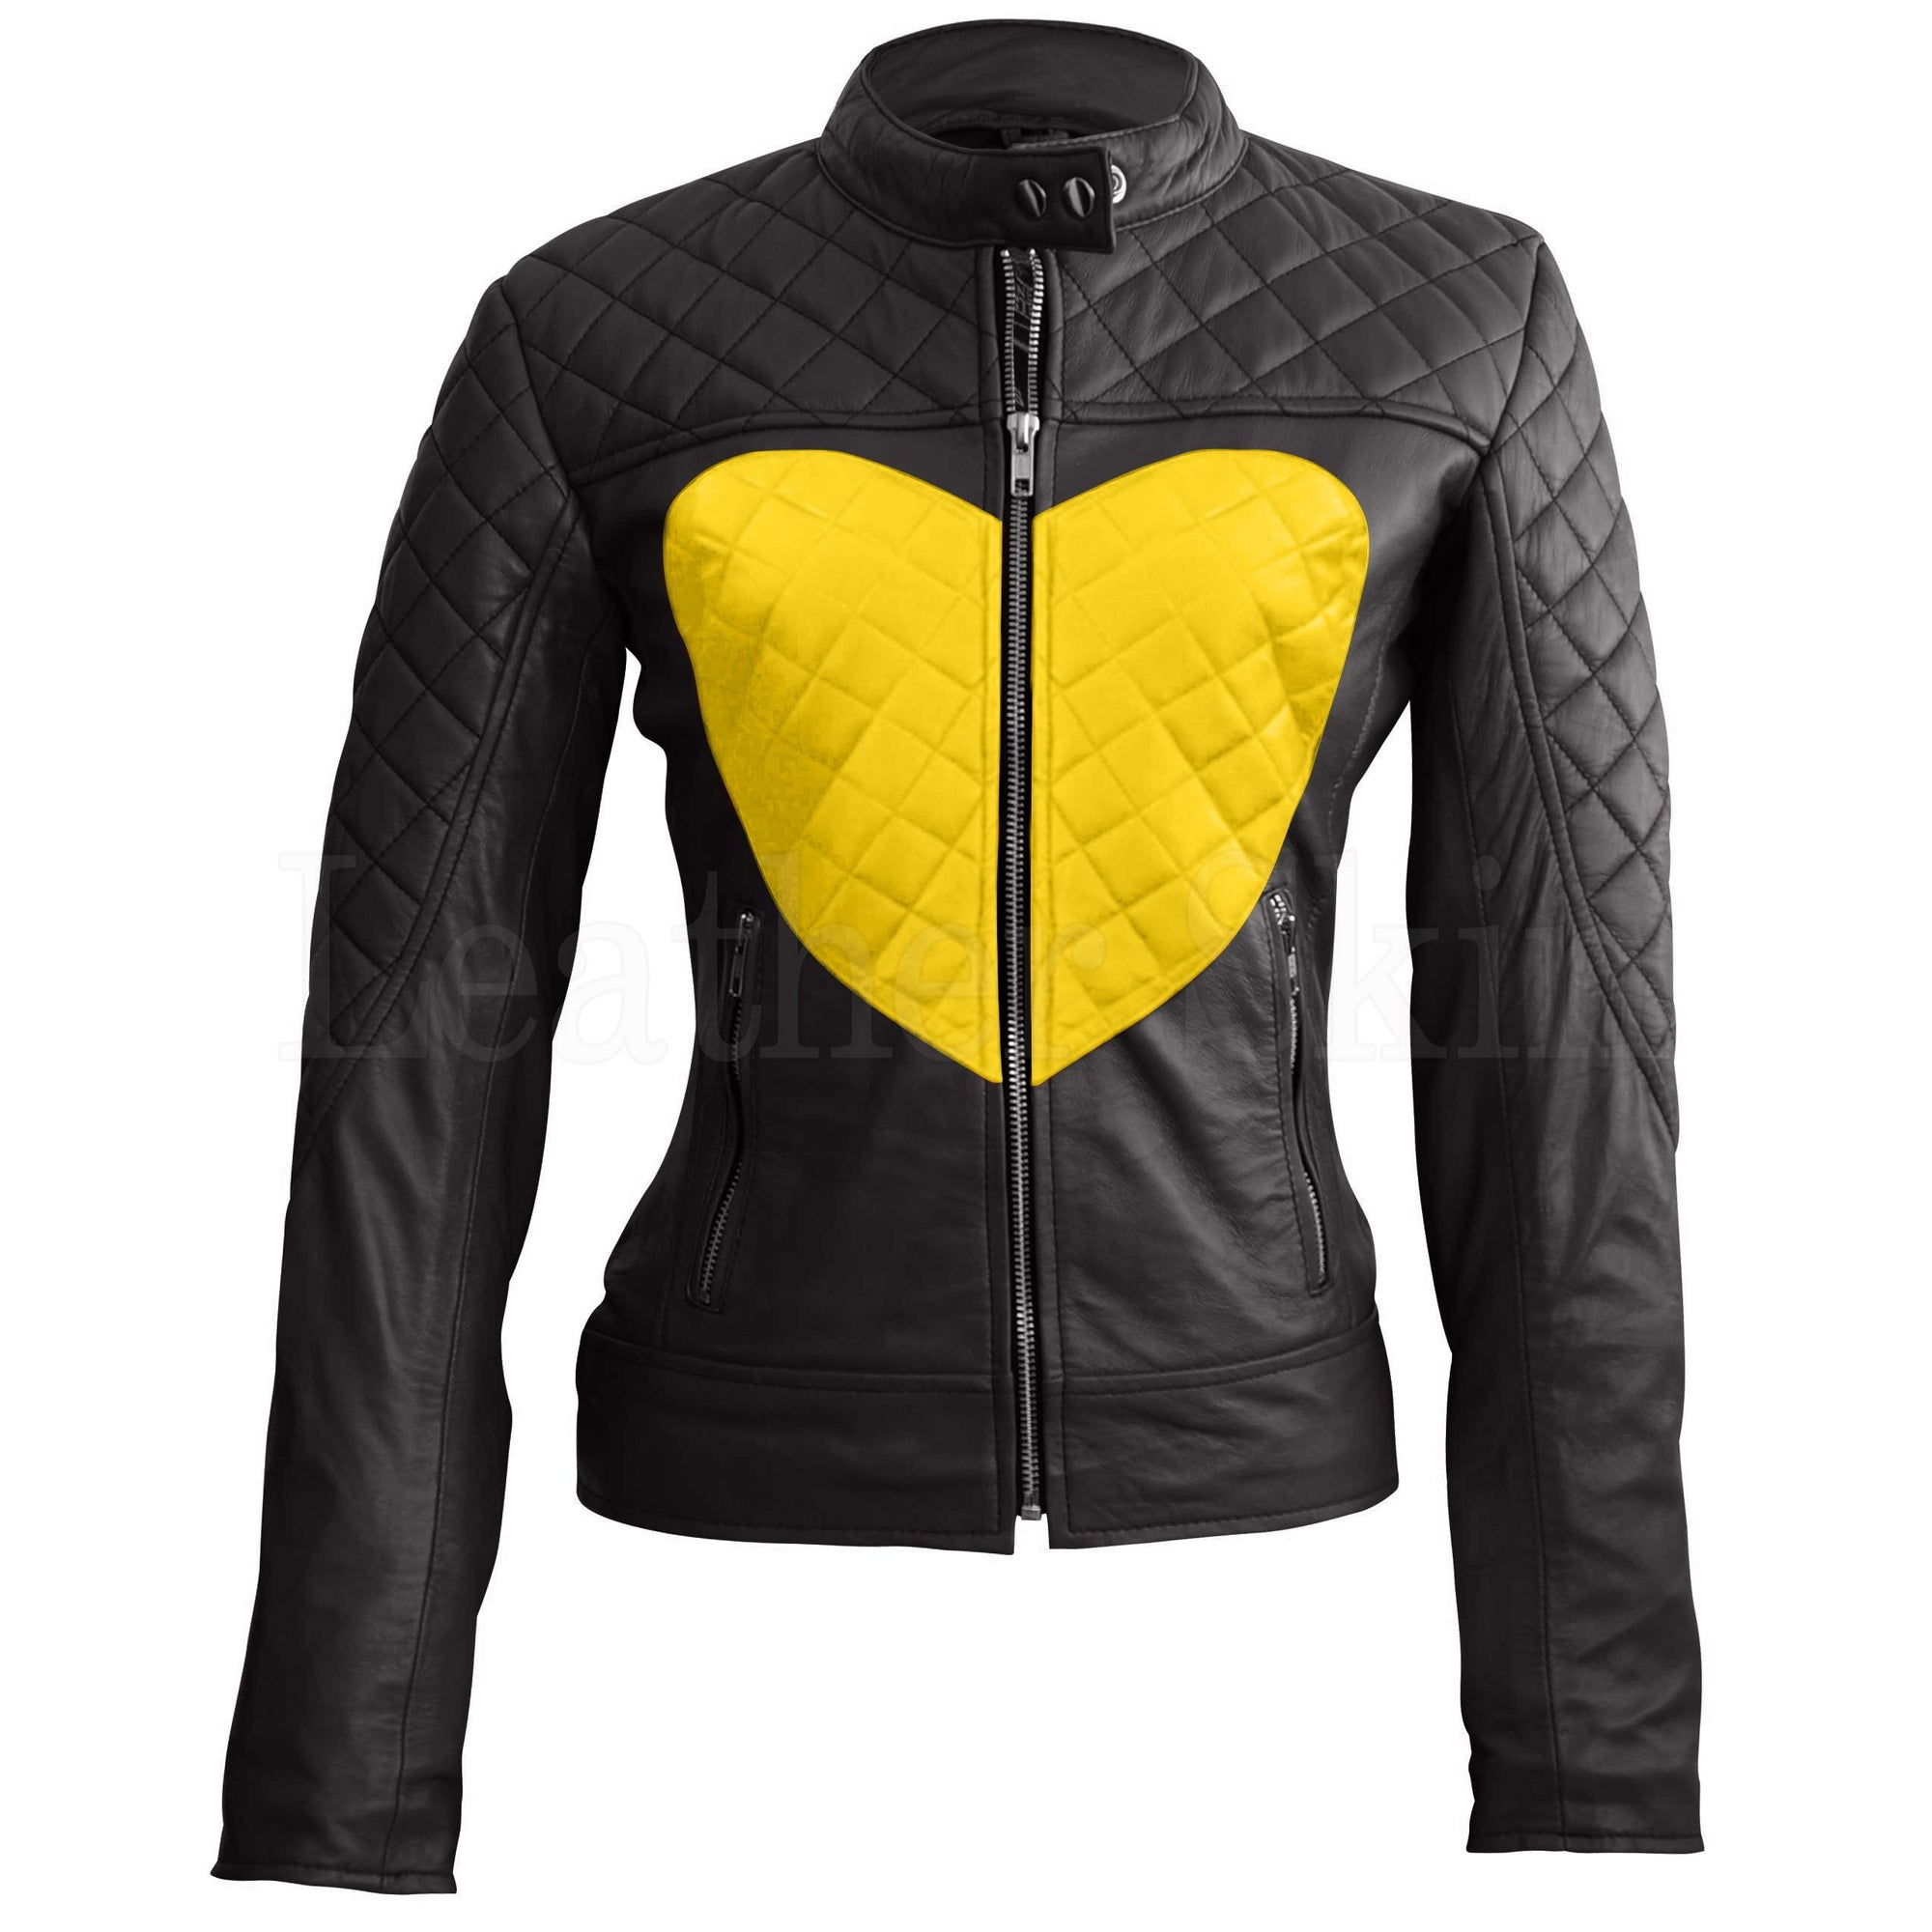 Women's Yellow Leather Jackets Motorcycle Bomber Biker - Mready